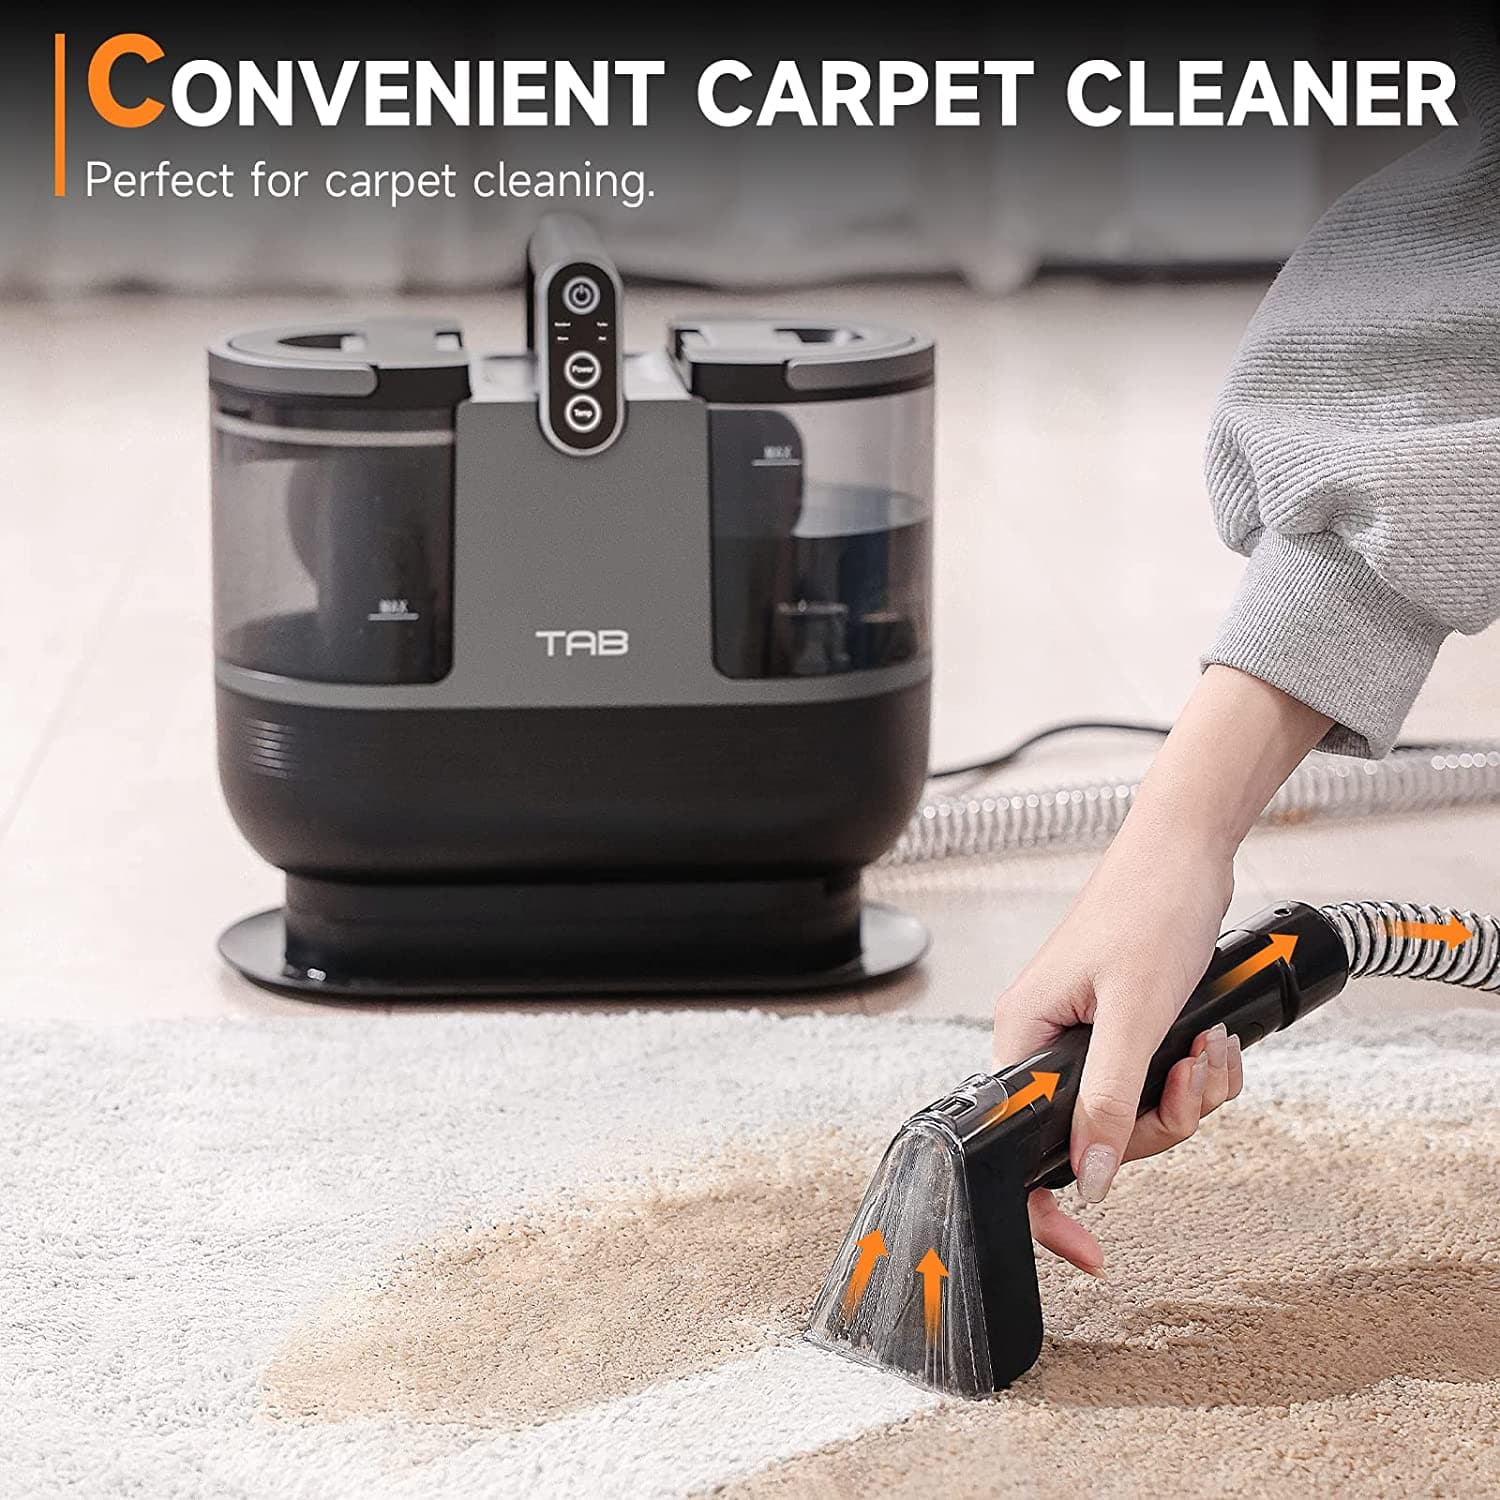 Carpet Cleaners, Carpet Shampooers, Rug Cleaners